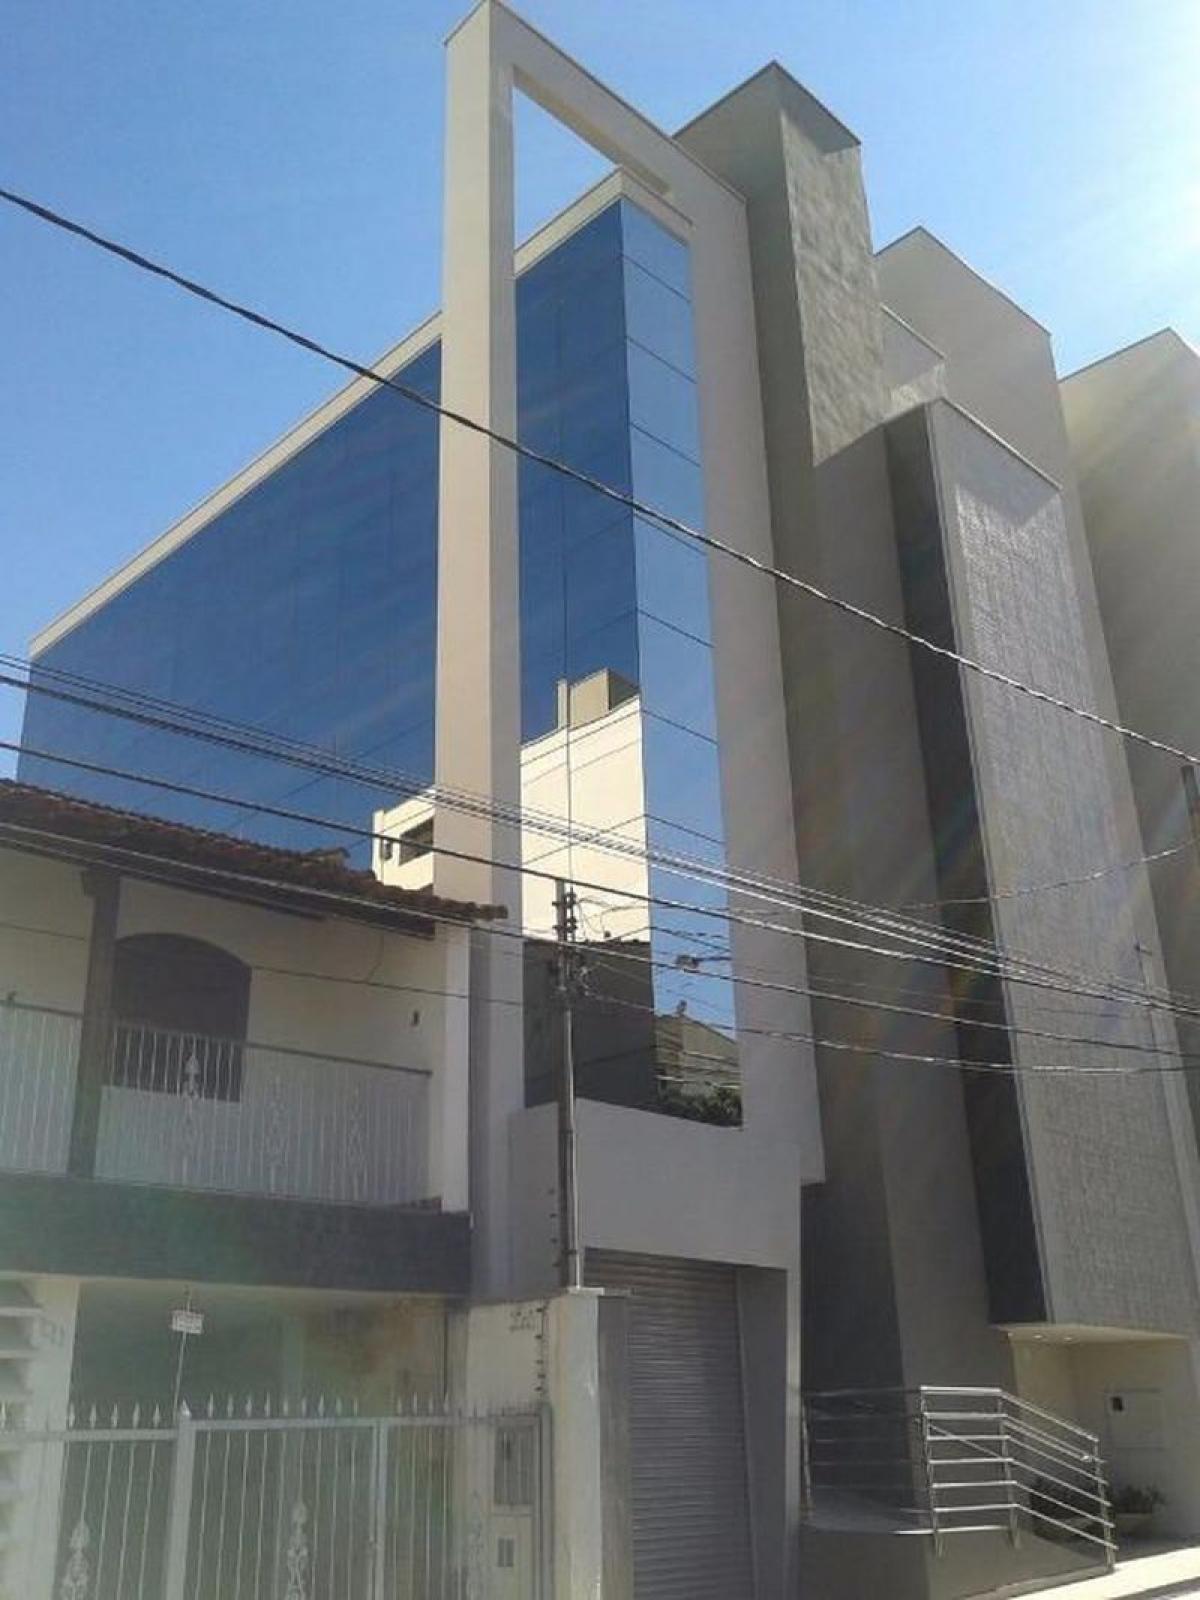 Picture of Commercial Building For Sale in Pouso Alegre, Minas Gerais, Brazil